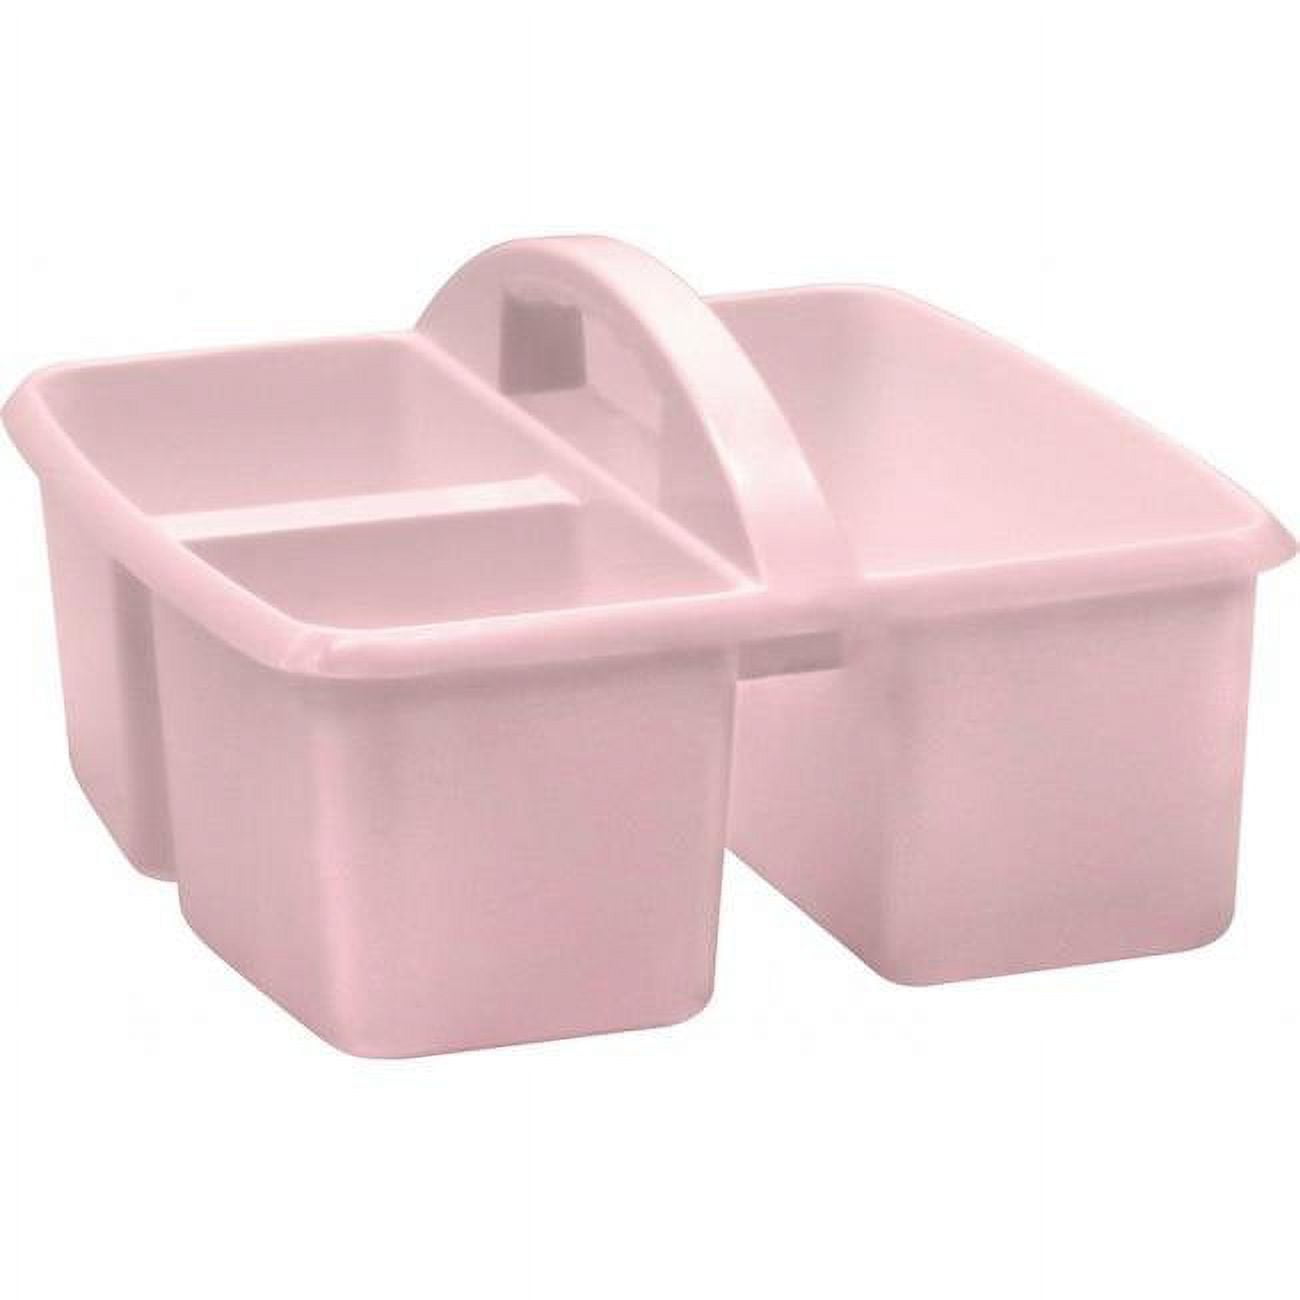 Purple Small Plastic Storage Bin 6 Pack - by TCR